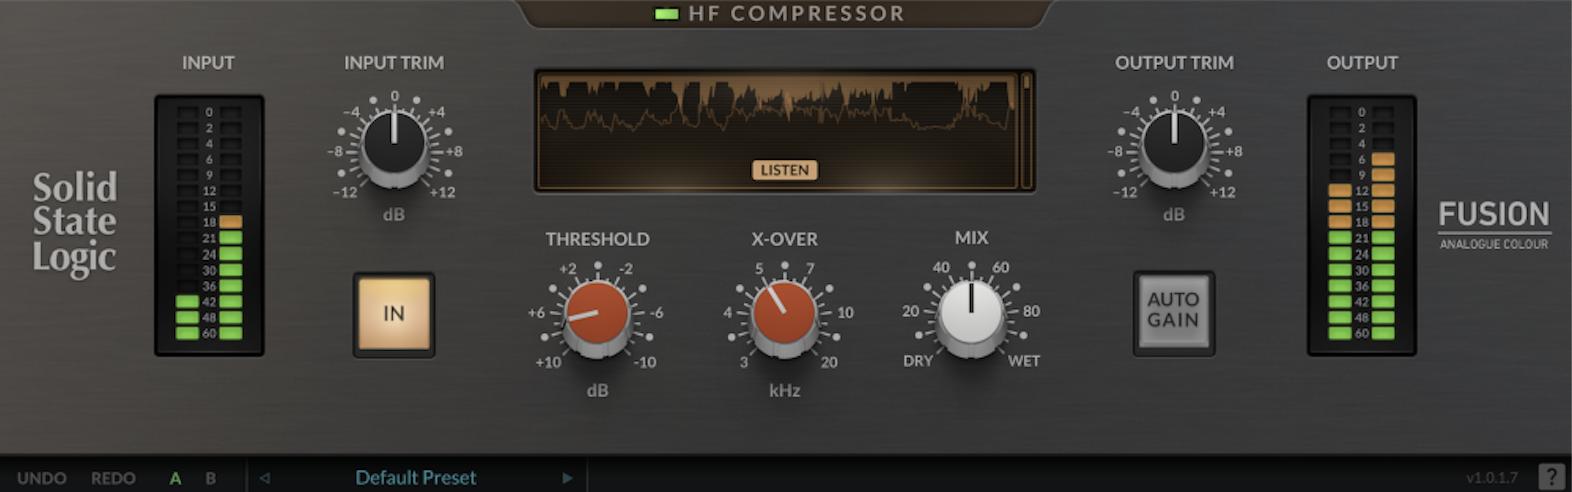 fusion_hf_compressor.png.jpg